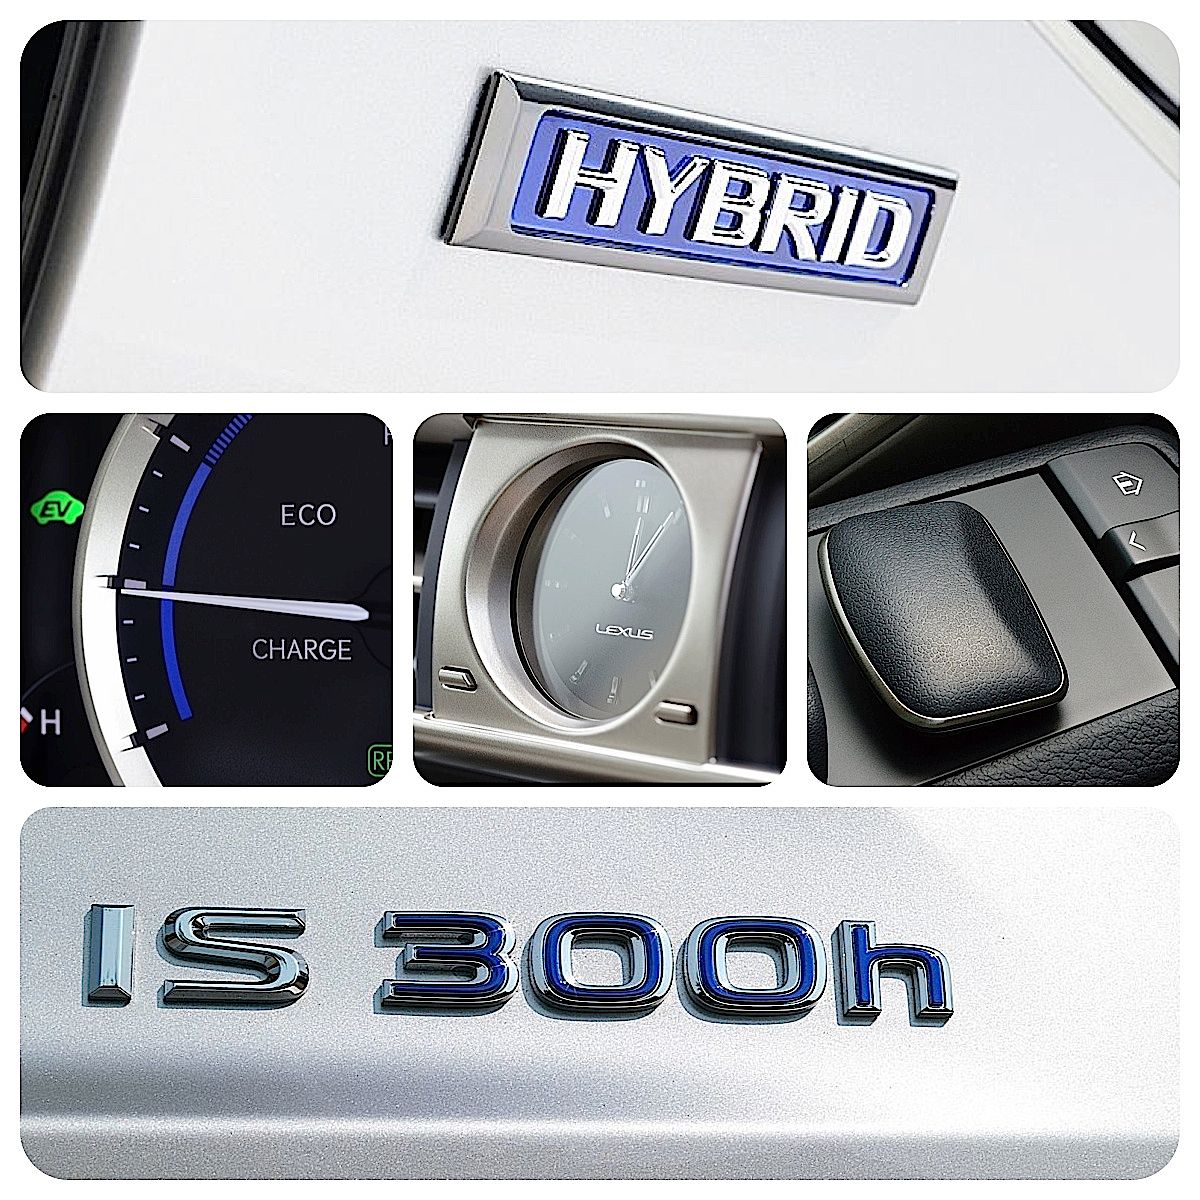 Drive Reviews the Lexus IS300h F-Sport